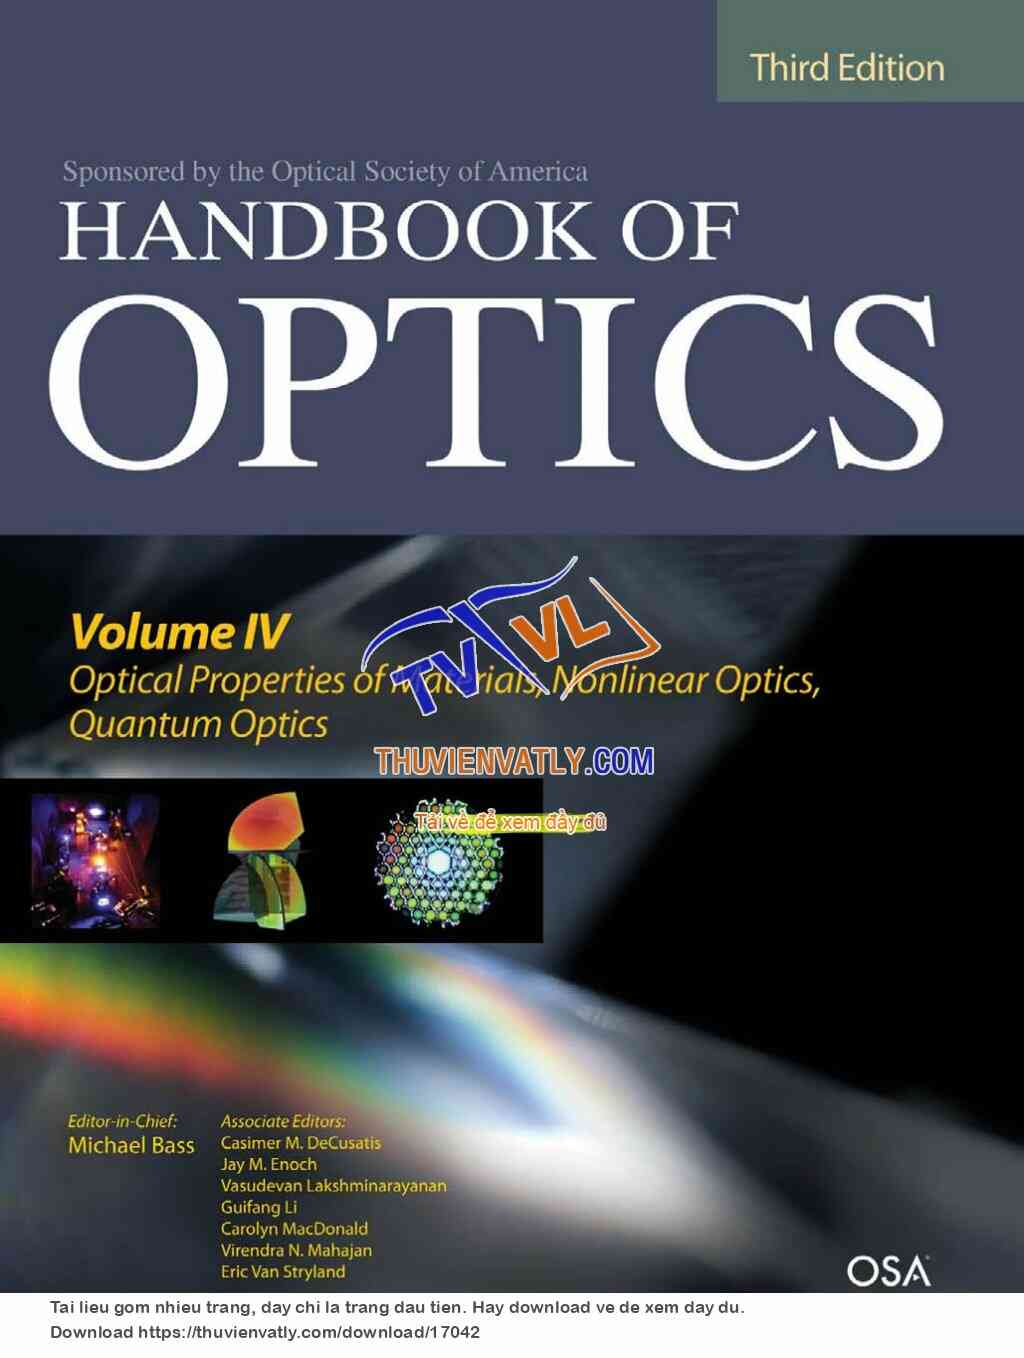 Handbook of Optics, Third Edition Volume IV - Optical Properties of Materials, Nonlinear Optics, Quantum Optics